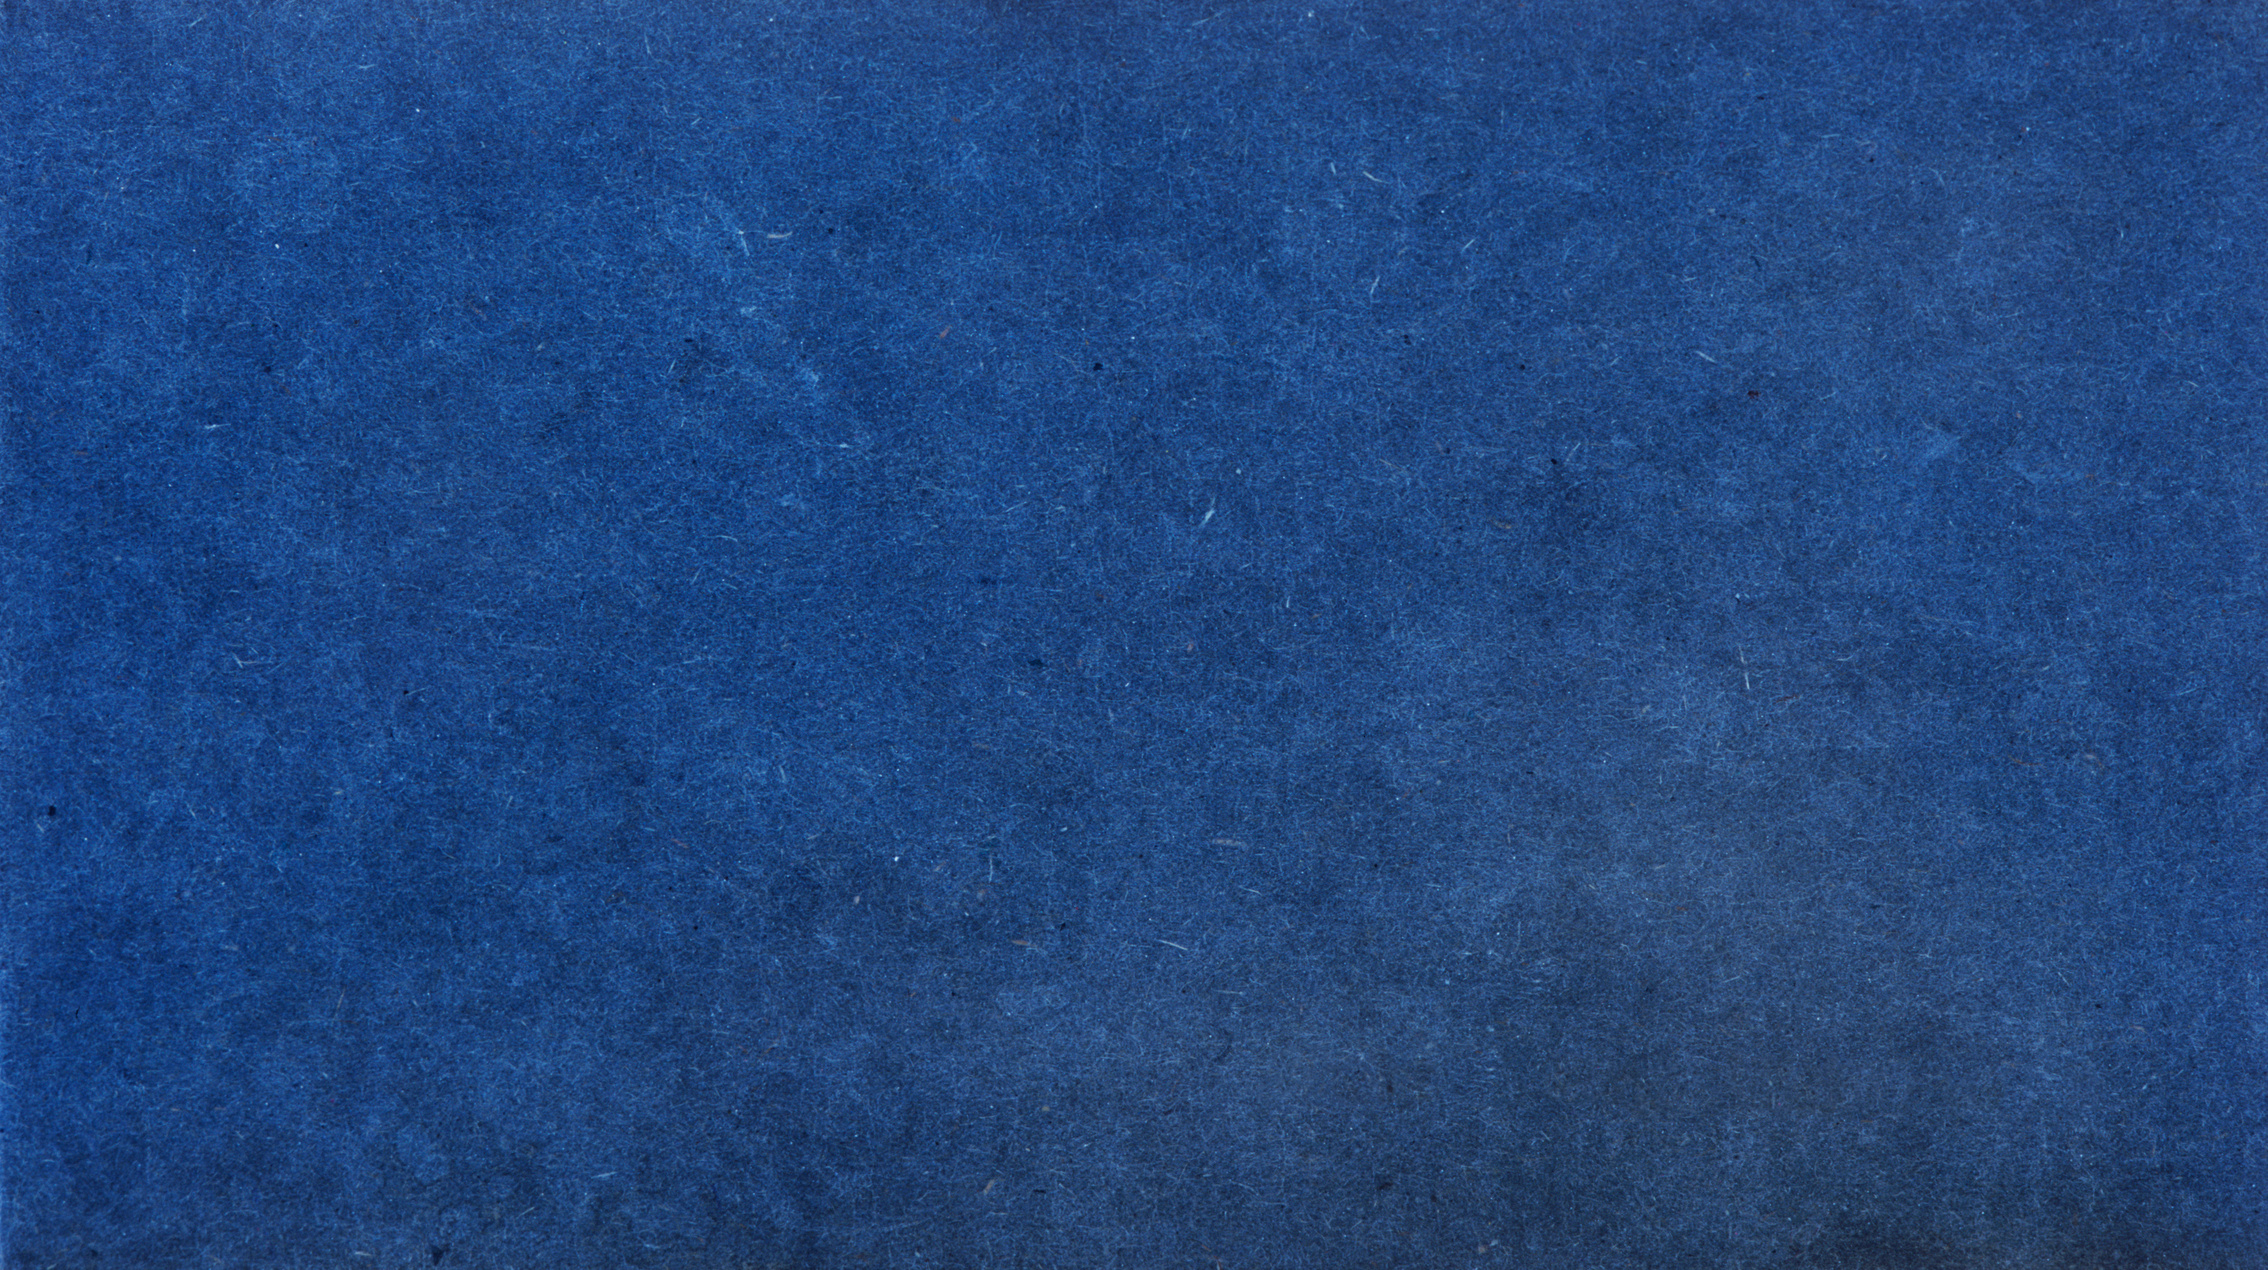 Textured Blue Paper